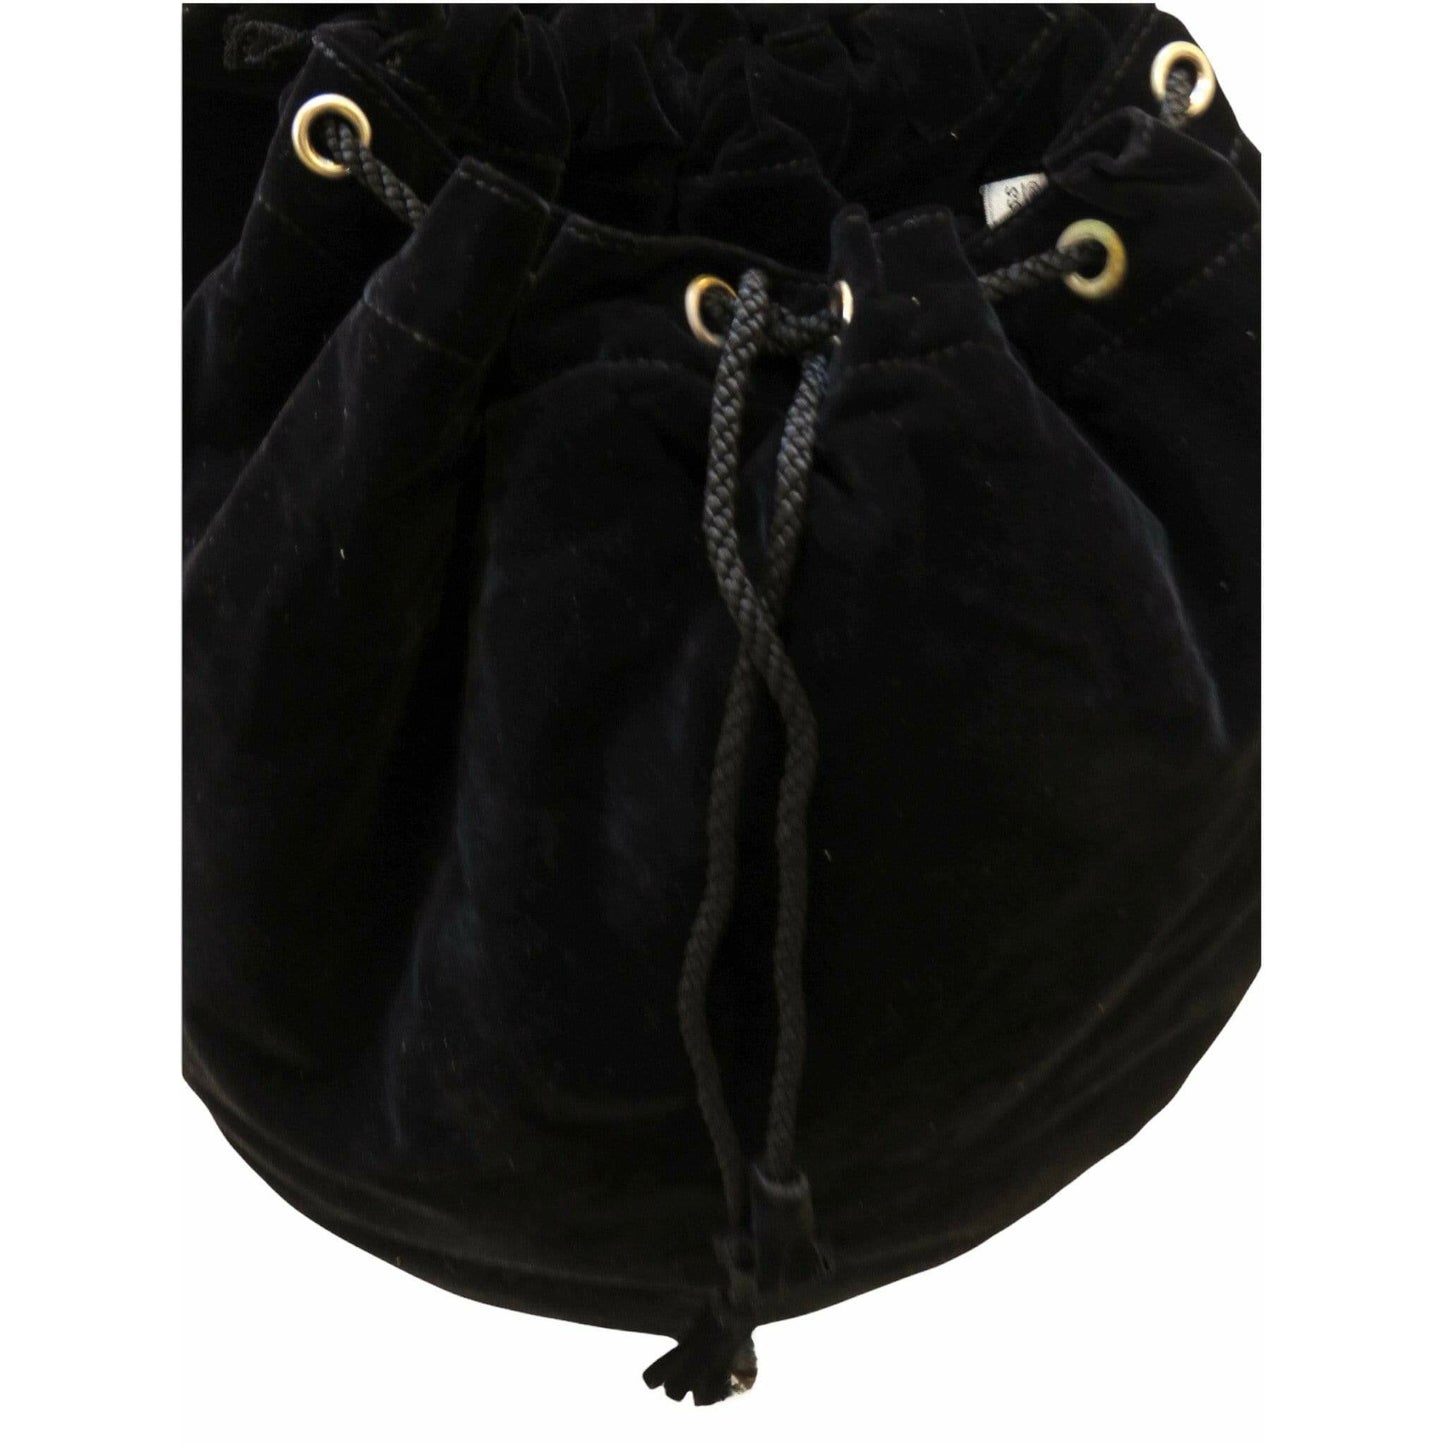 chantal-thomass-velvet-and-lace-ruffle-round-shoulder-bag Handbags Black